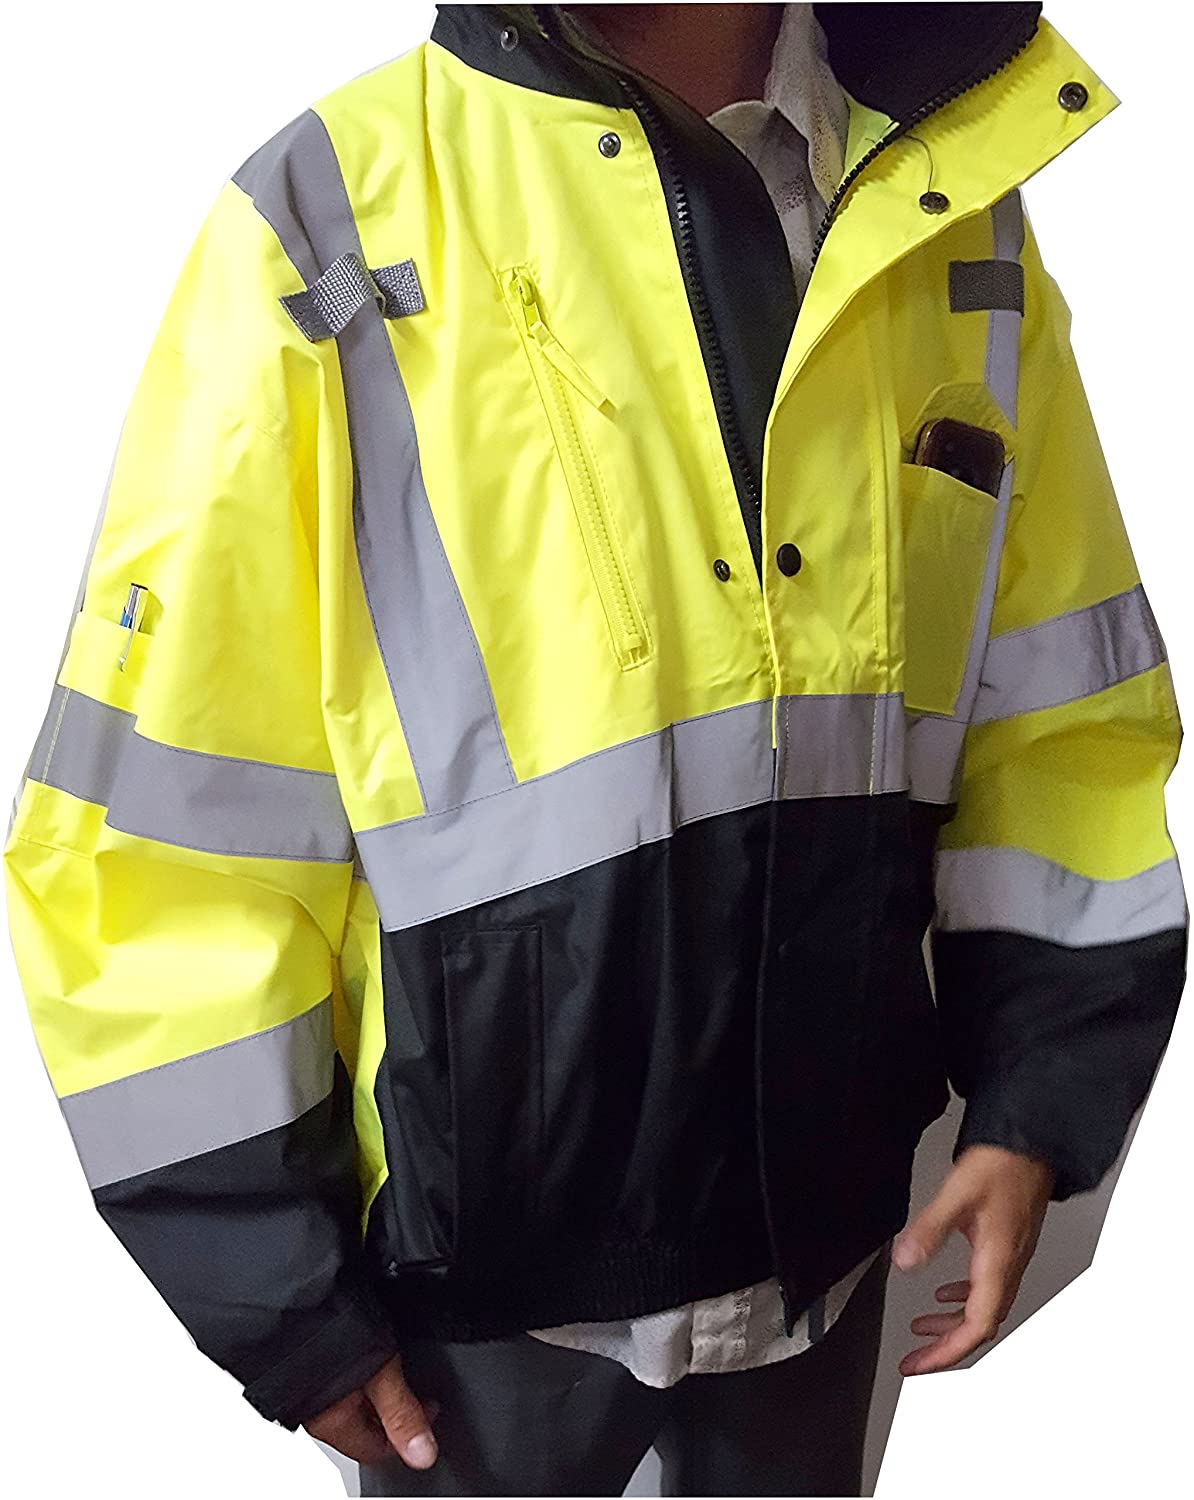 XX-Large Safety Reflective Jacket Bright Neon Yellow